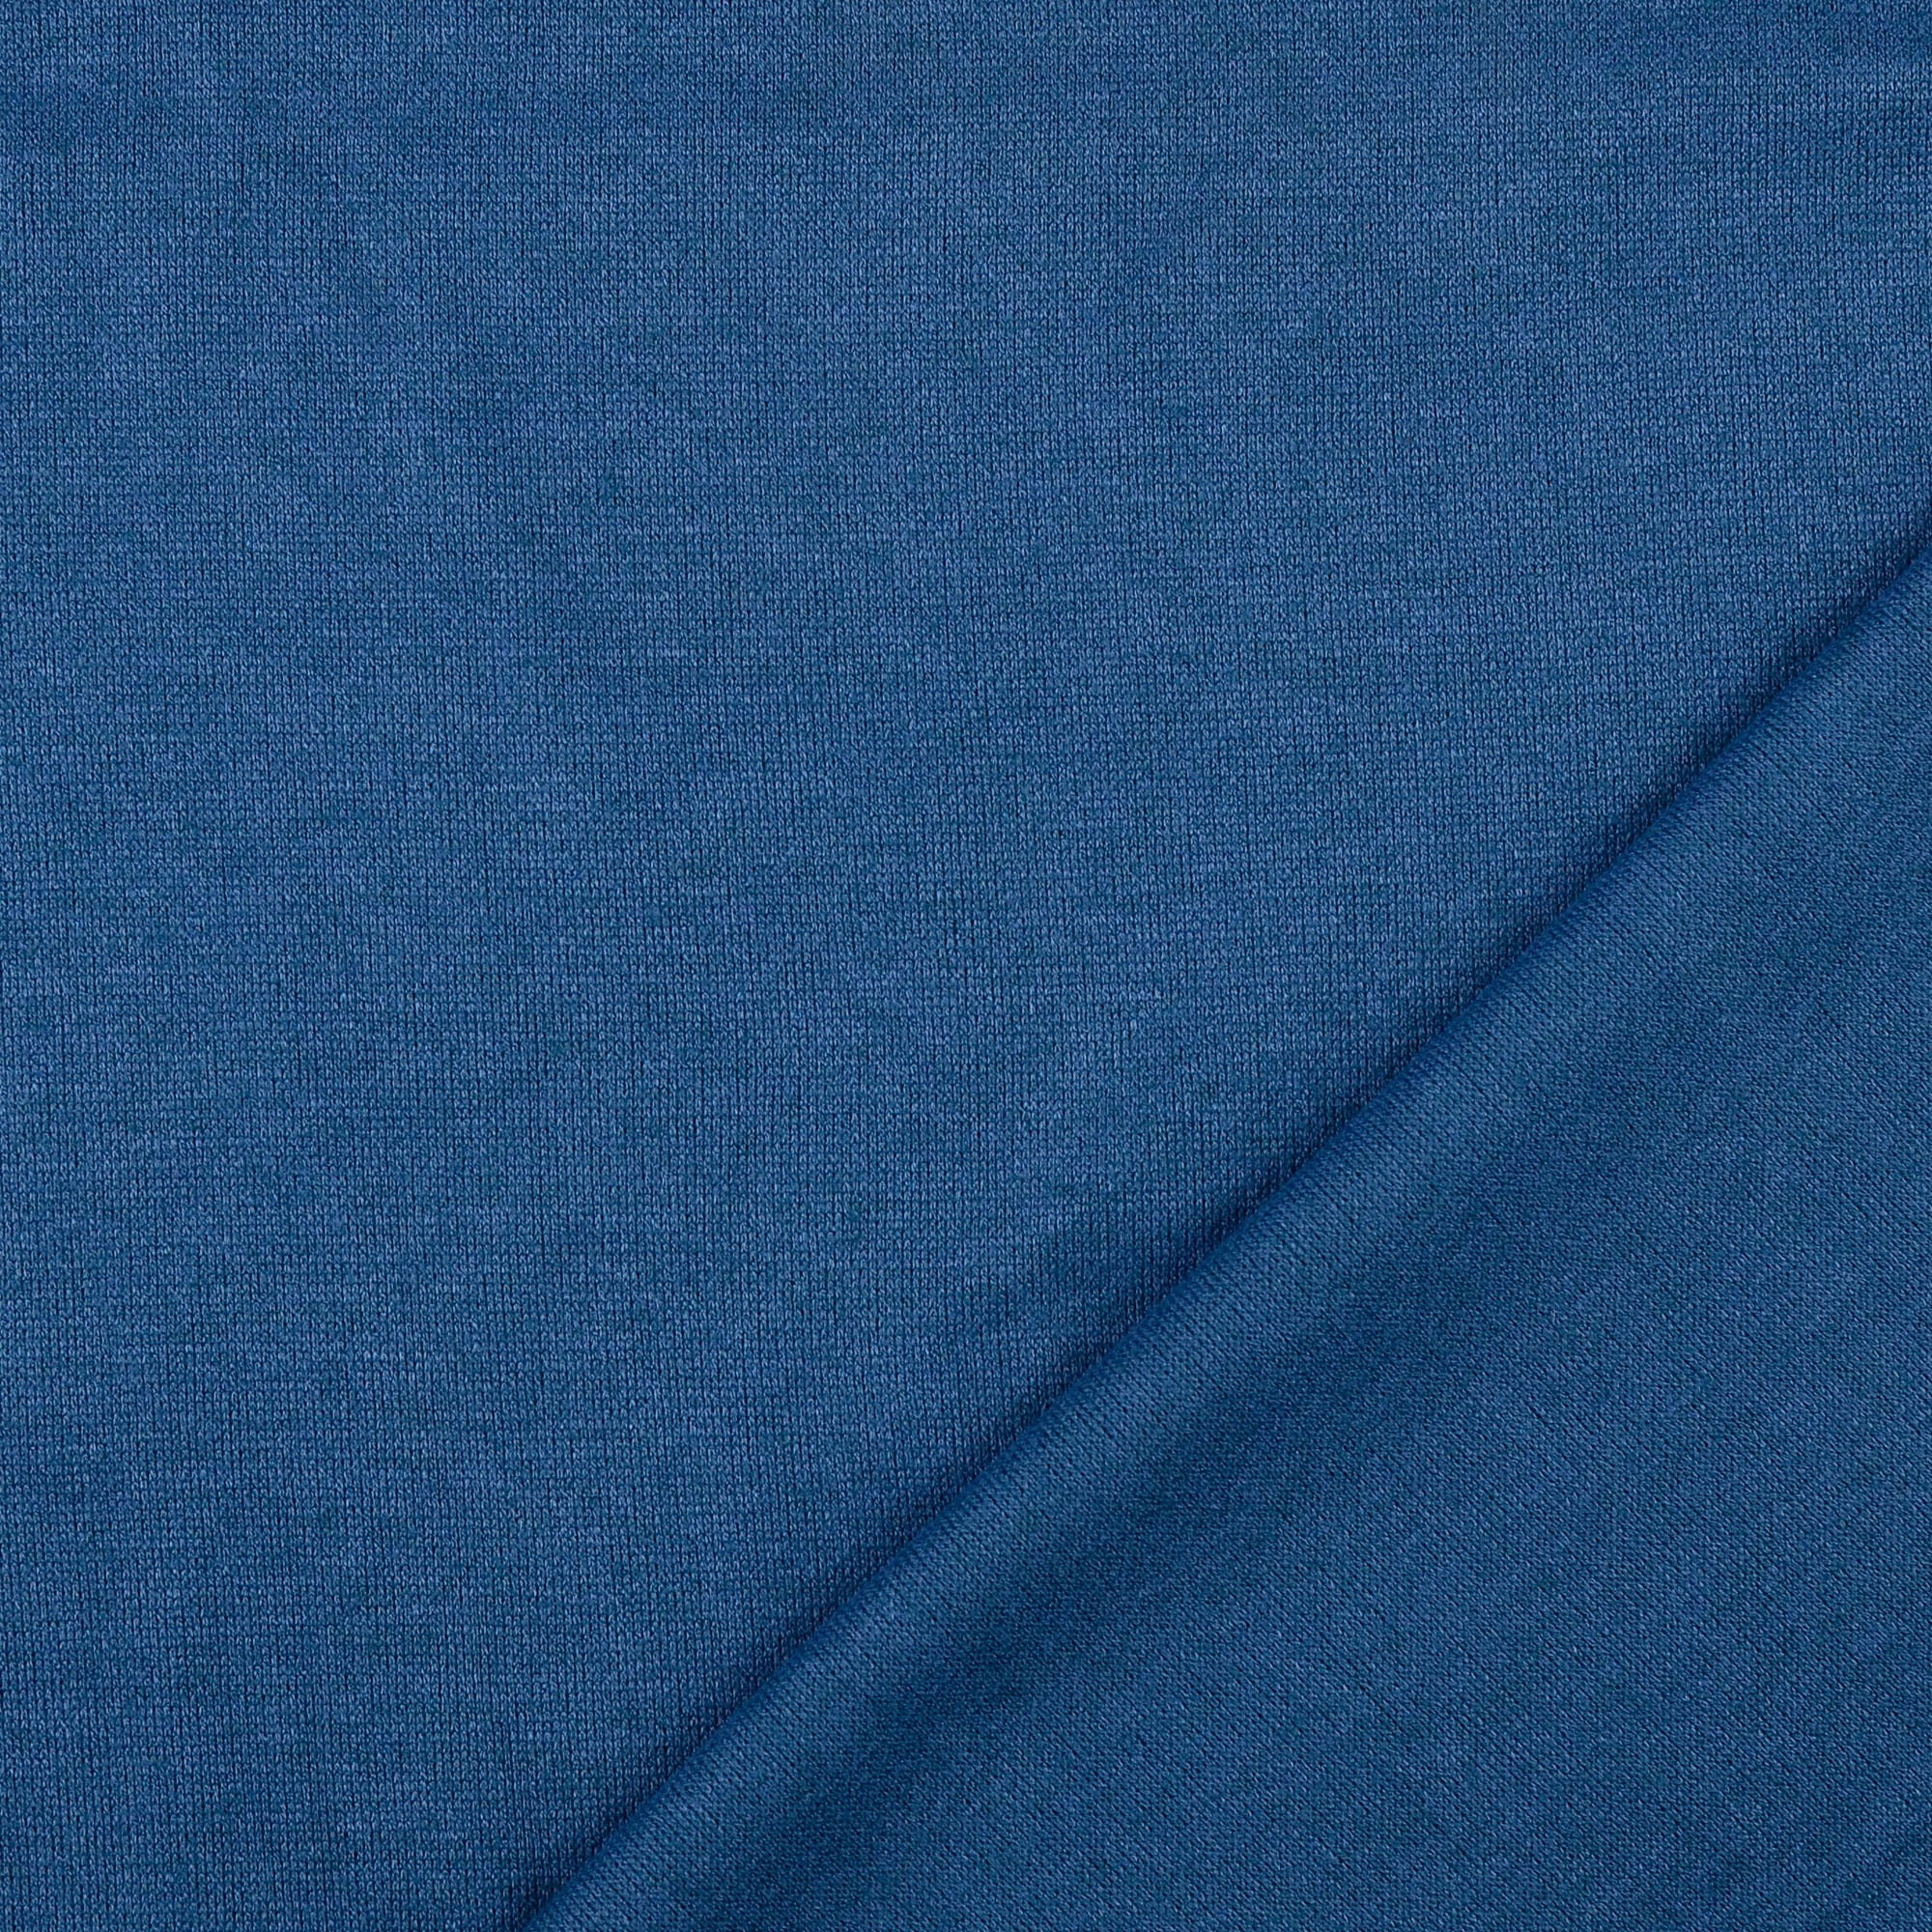 REMNANT 0.75 Metre - Snug Viscose Blend Sweater Knit in Ocean